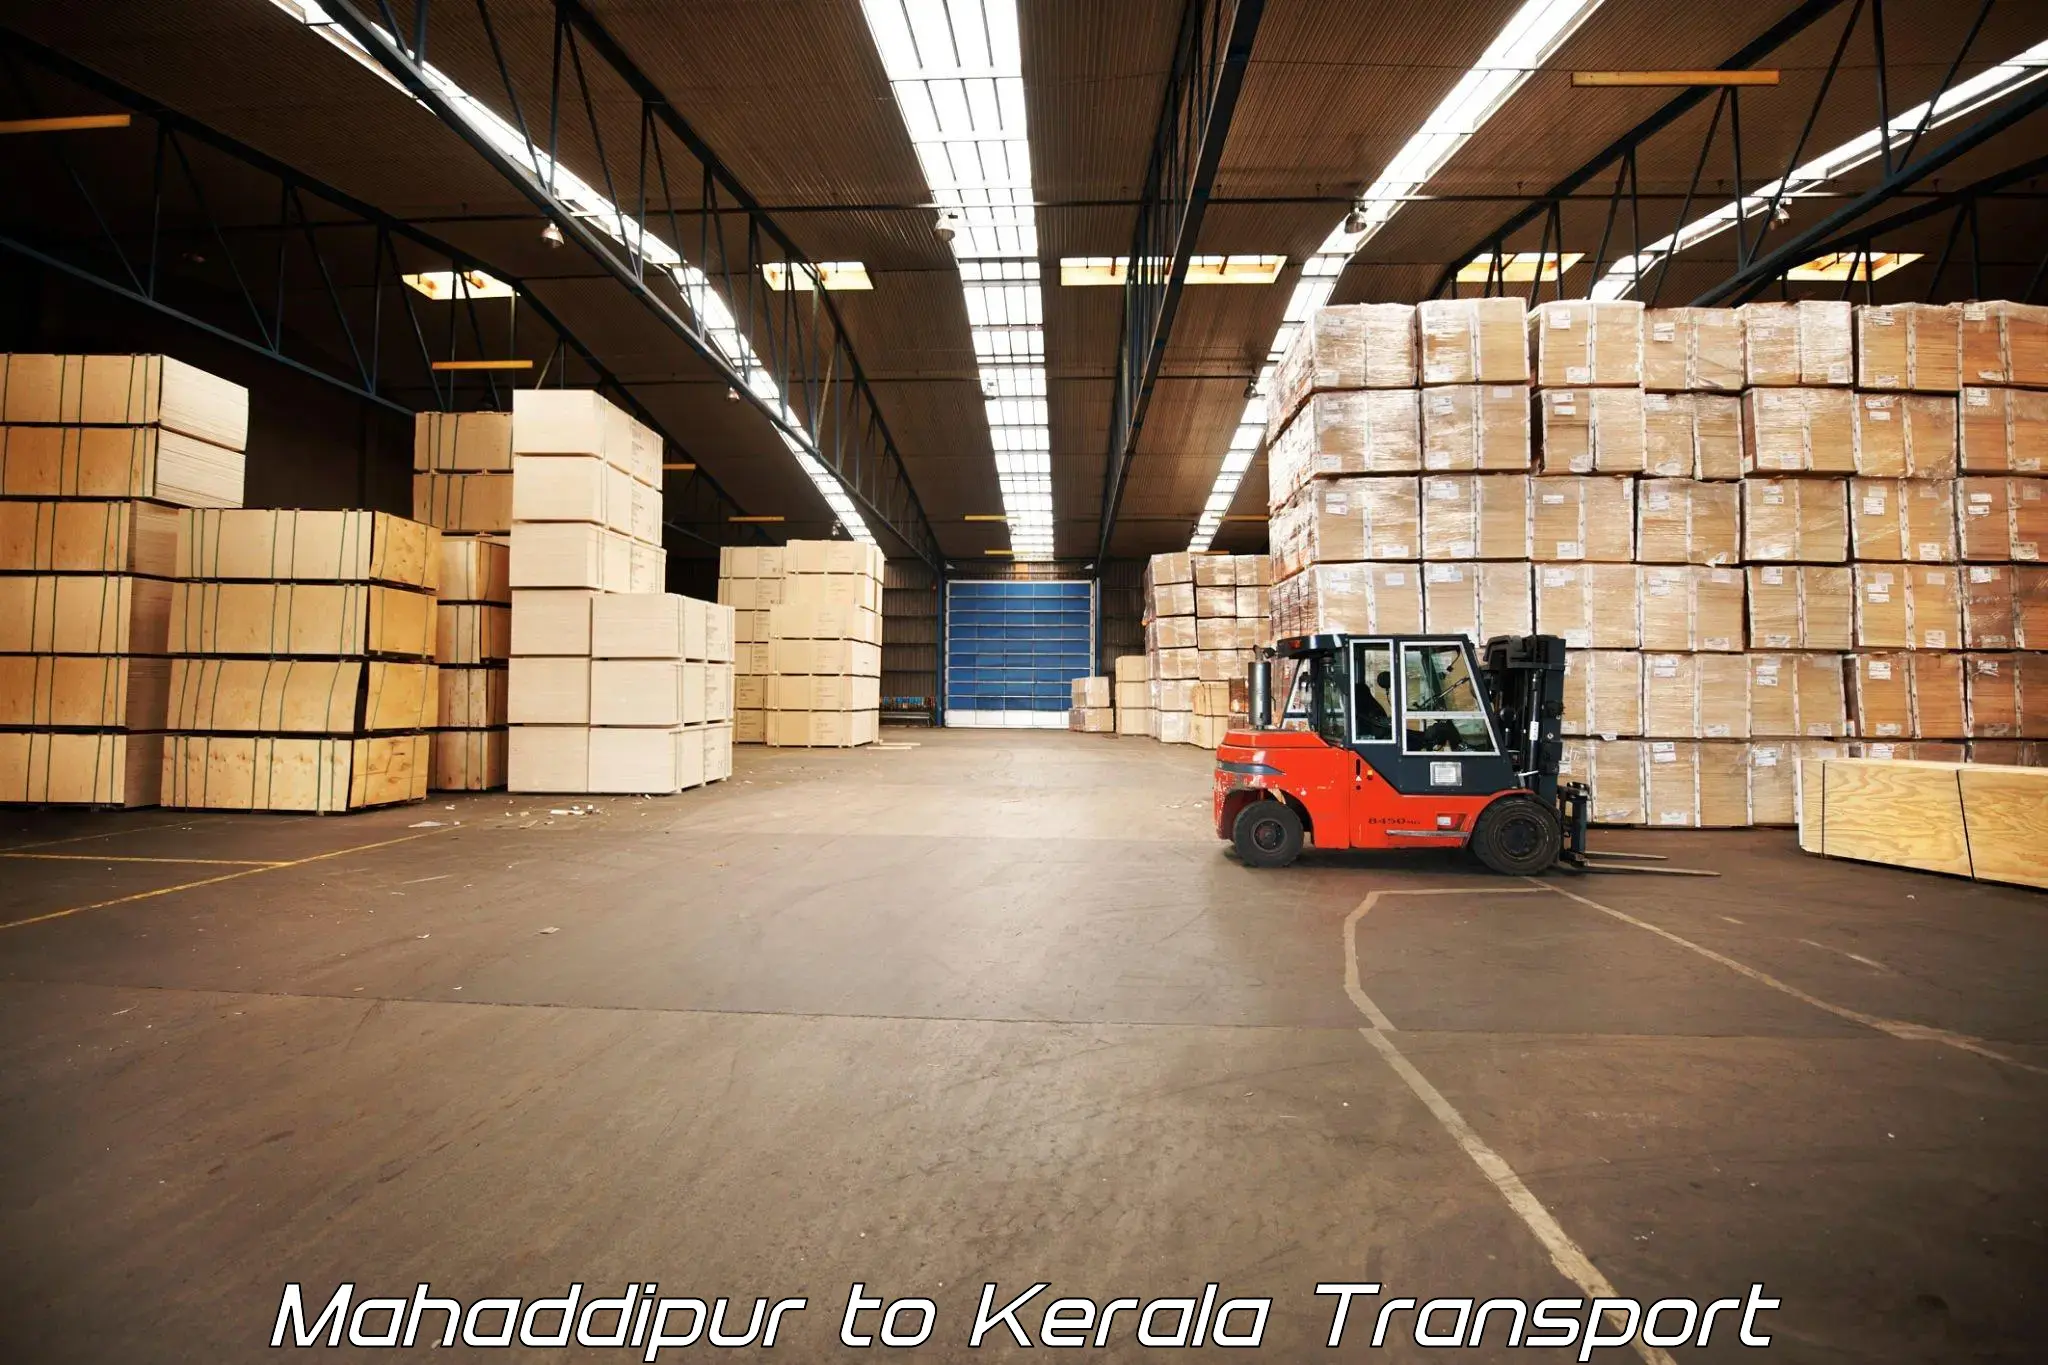 Shipping partner Mahaddipur to Kerala